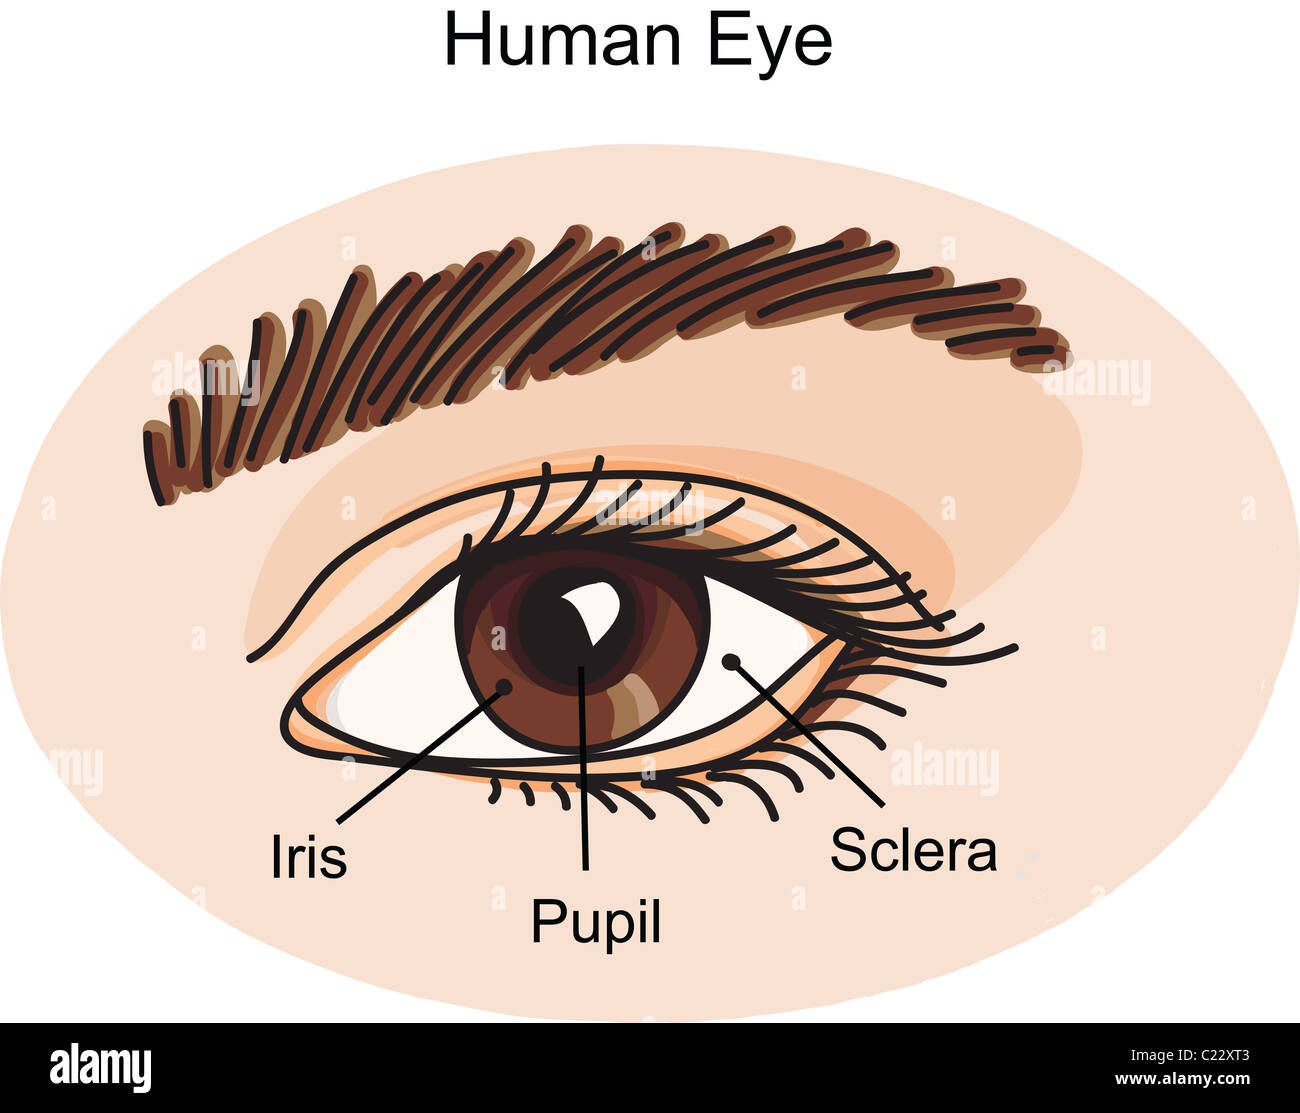 Human eye illustration Stock Photo